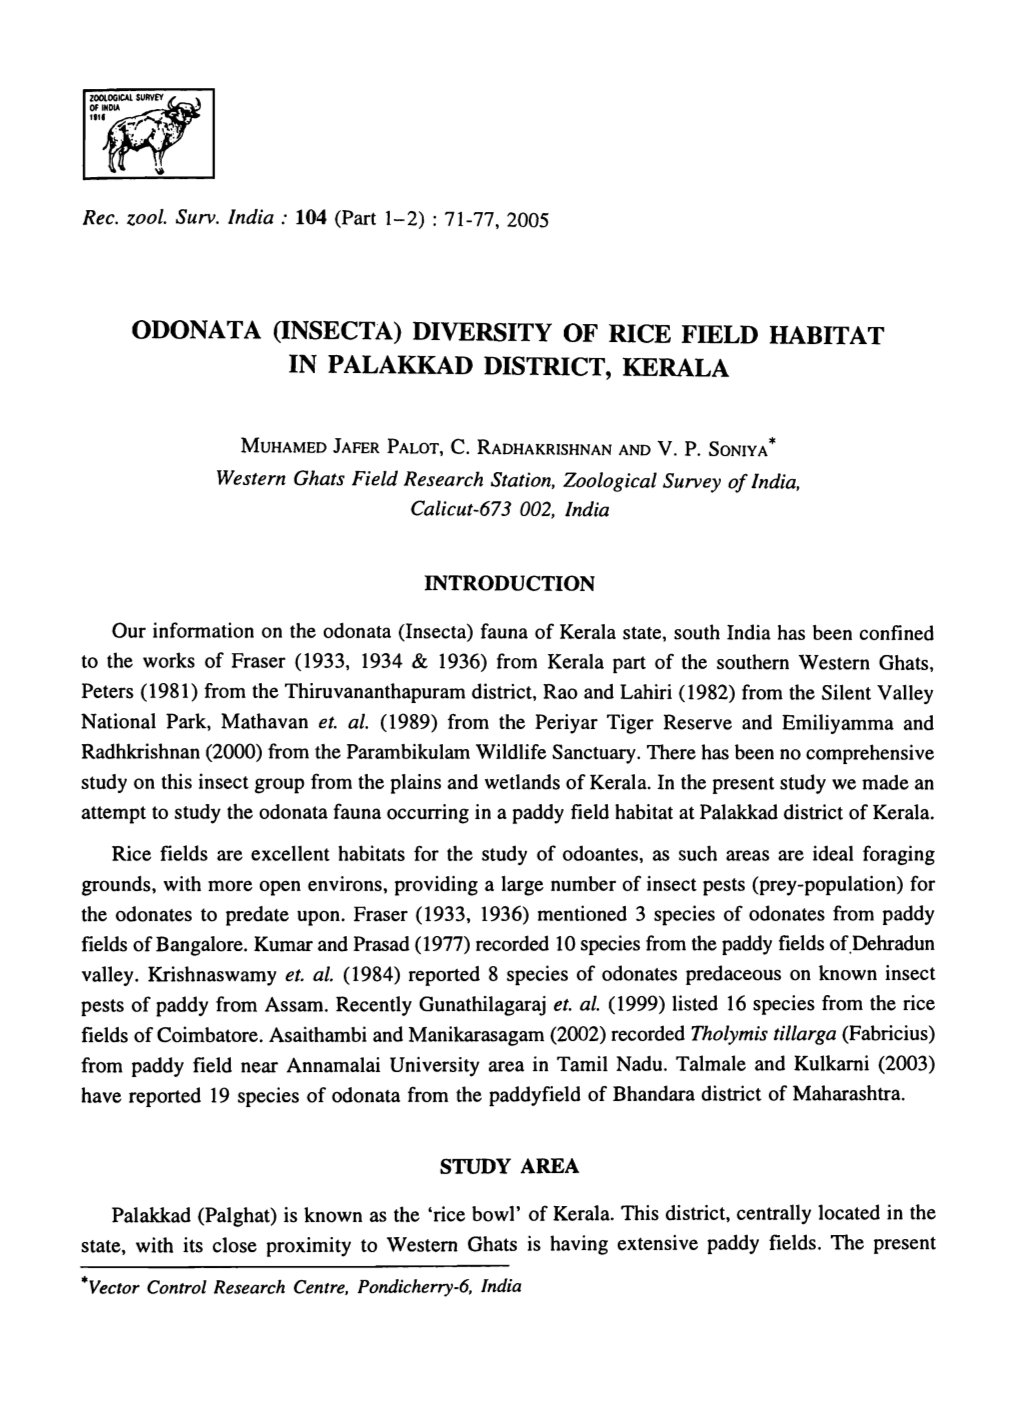 Odonata (Insecta) Diversity of Rice Field Habitat in Palakkad District, Kerala